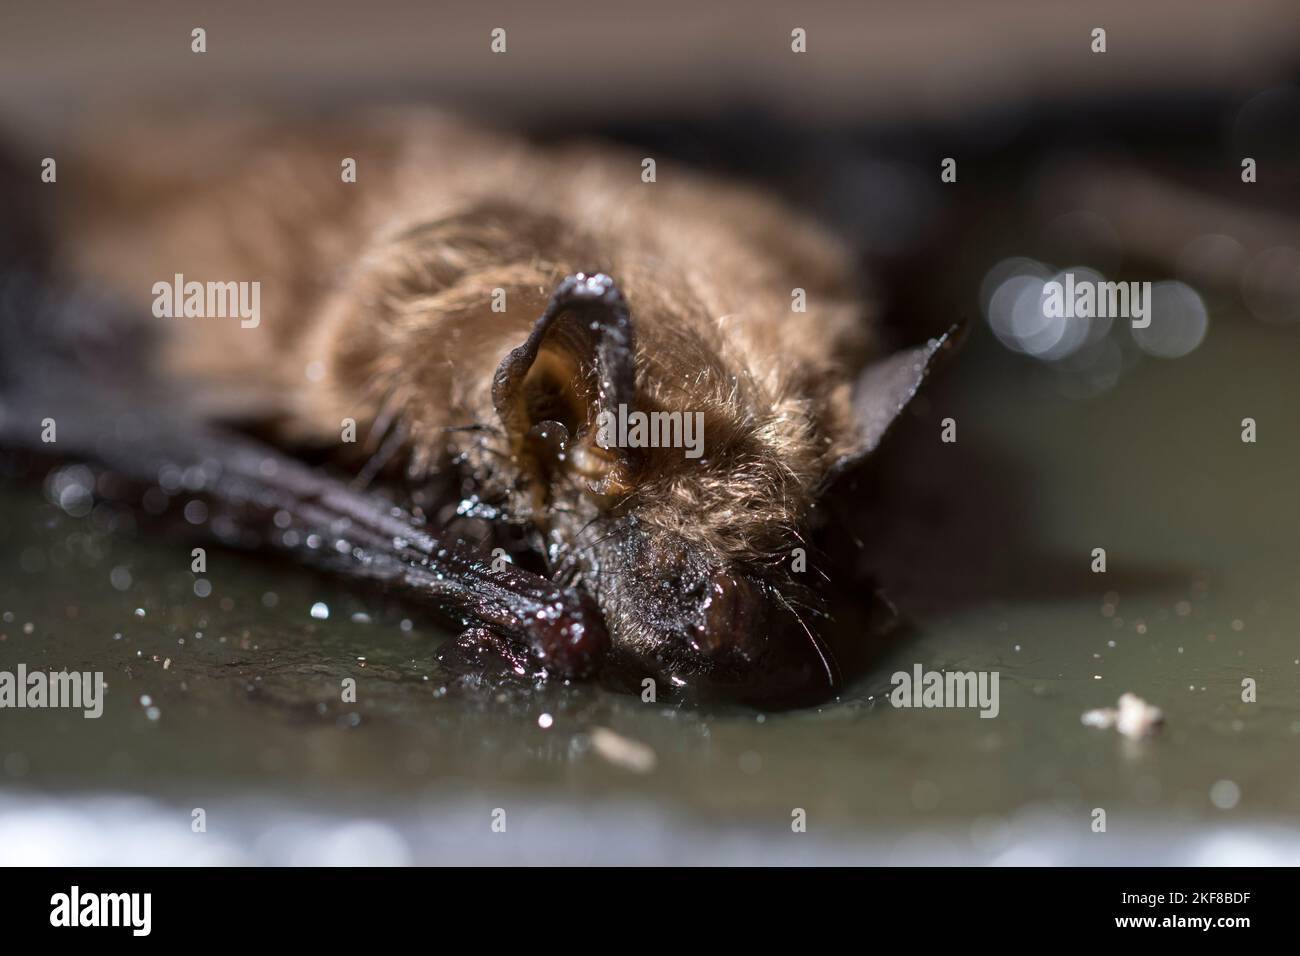 Bat infestation and eradication. Using glue traps to kill pests. Stock Photo